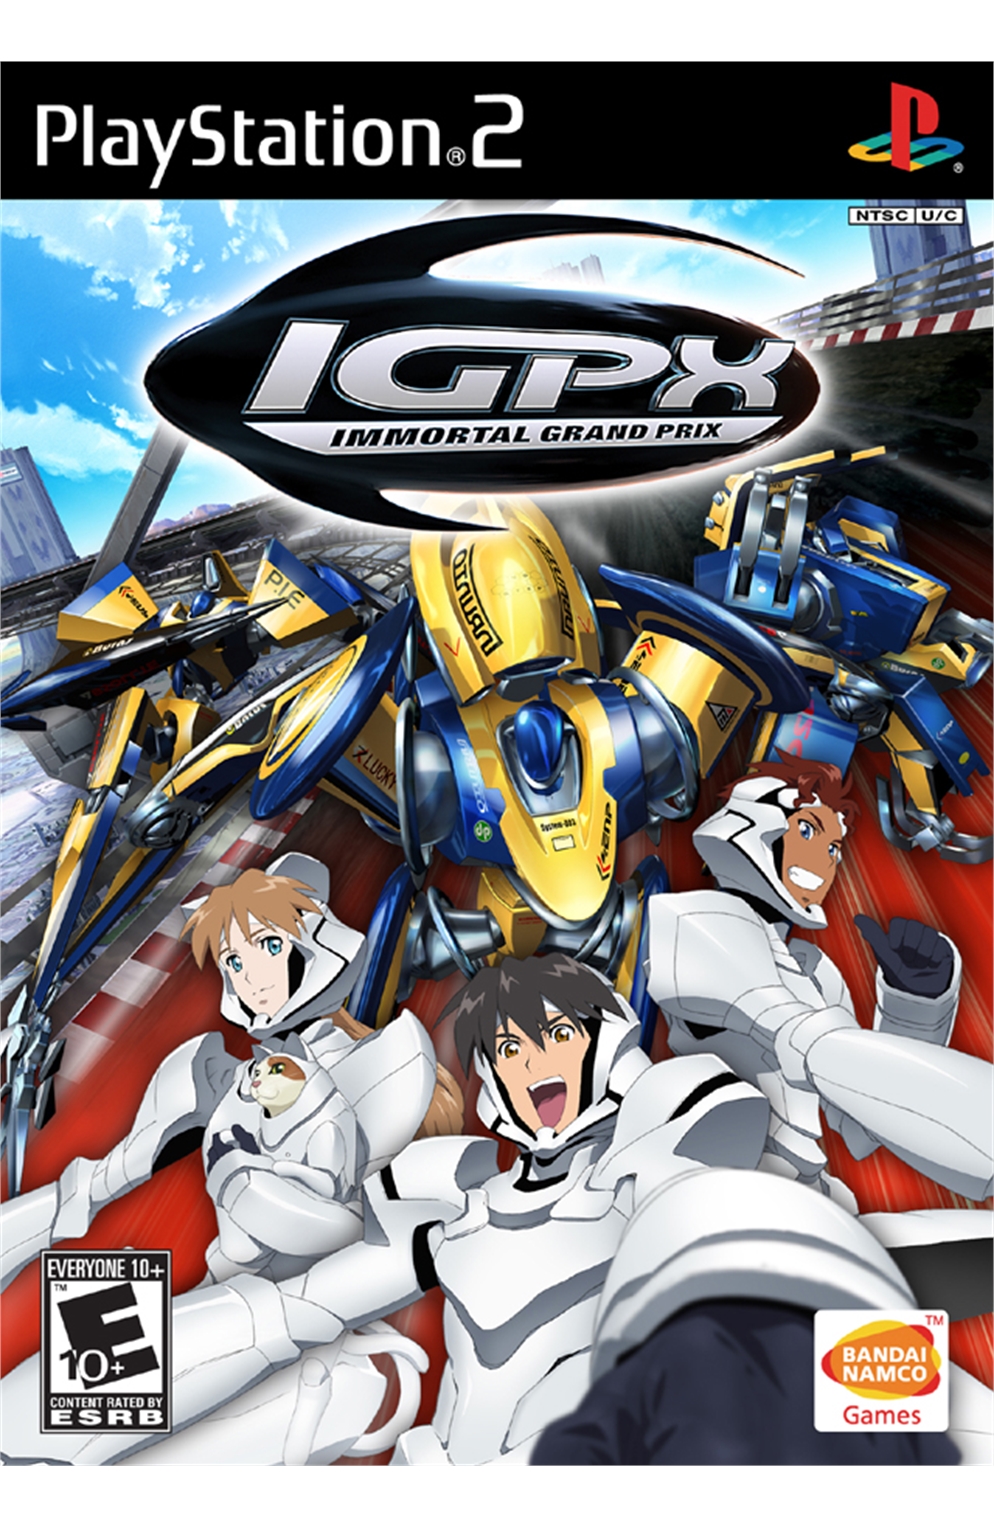 Playstation 2 Ps2 Igpx Immortal Grand Prix